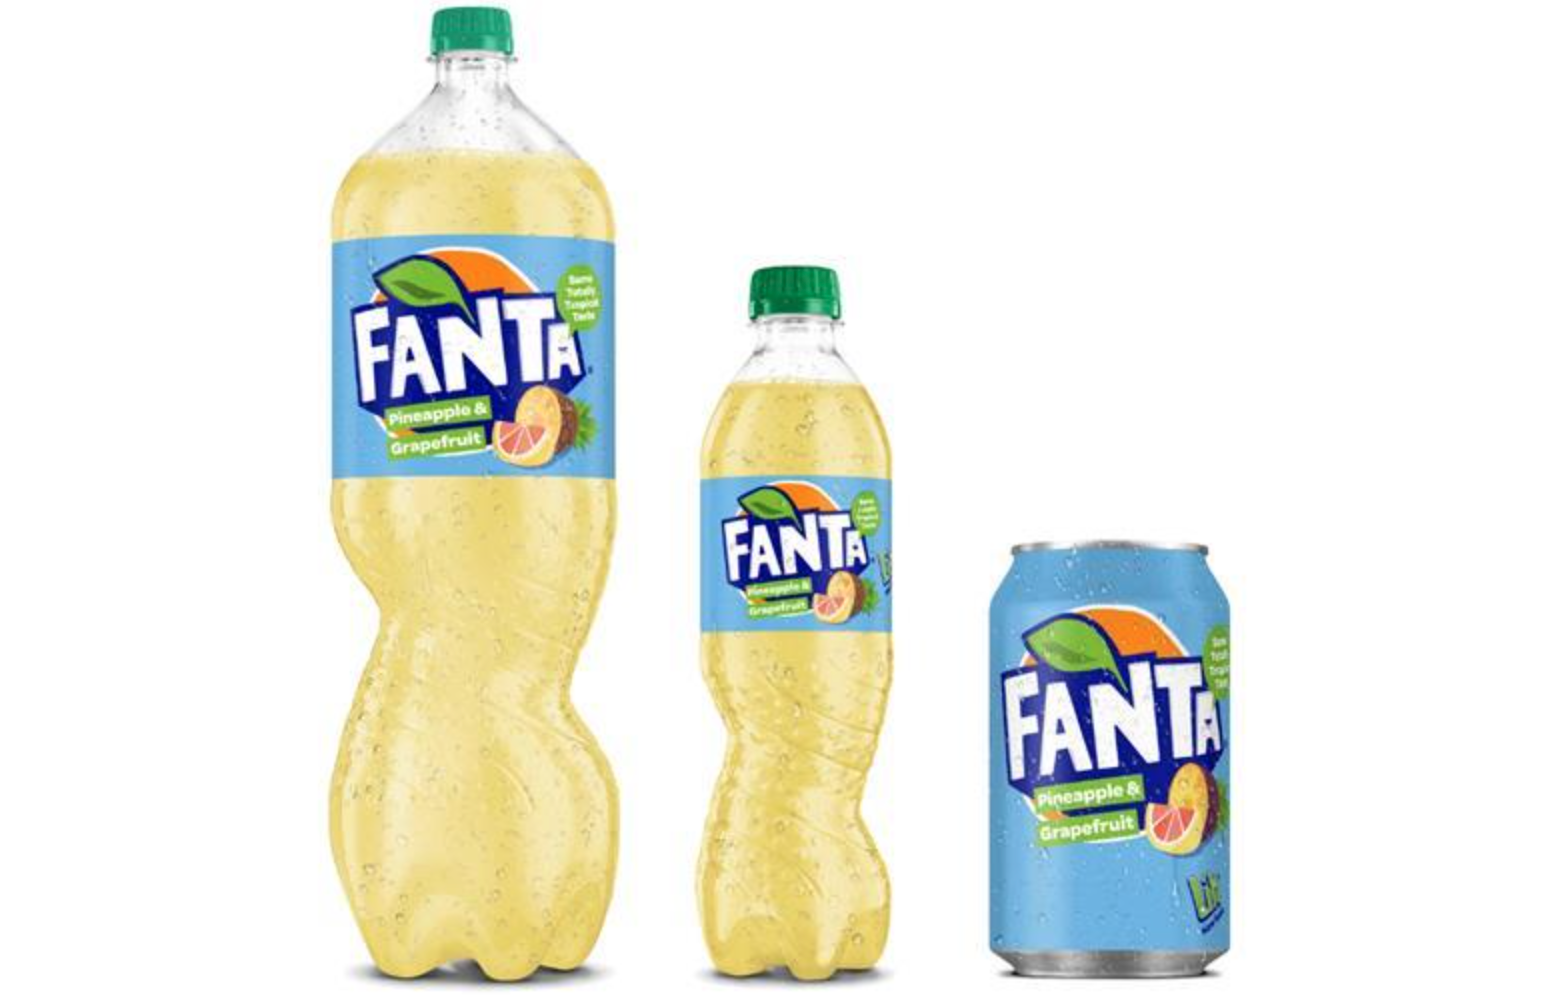 The new branding of Lilt called Fanta Pineapple and Grapefruit. 